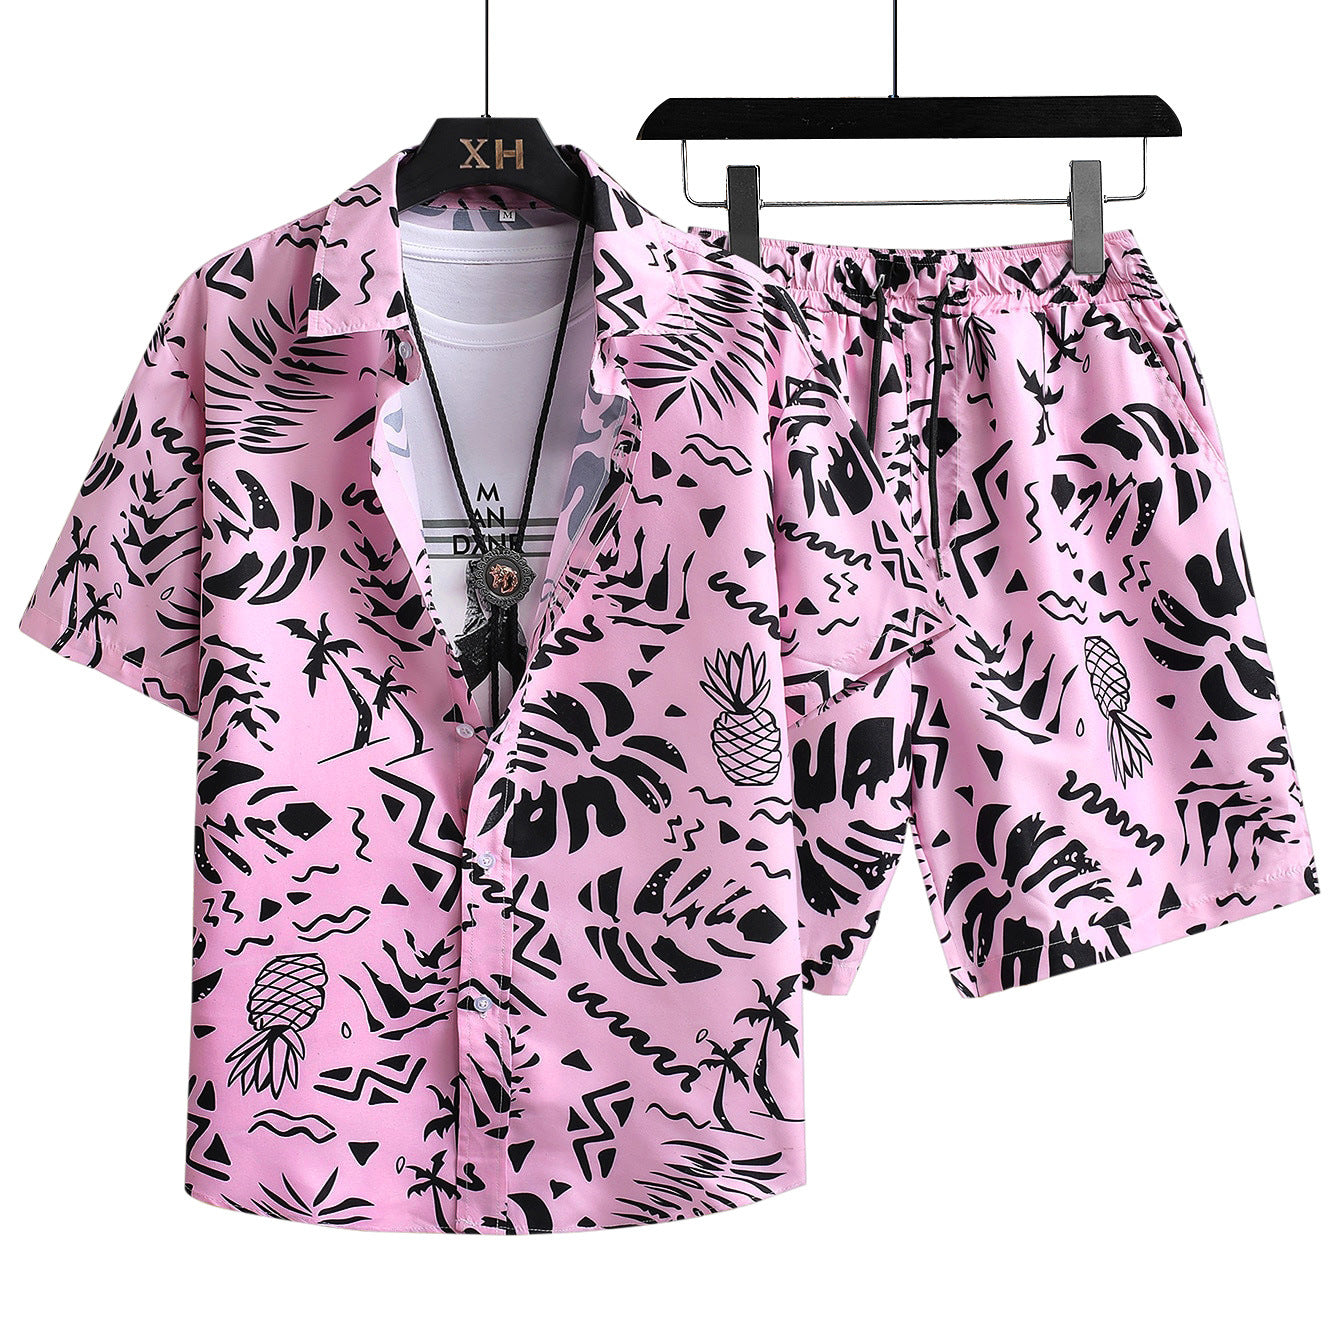 Men's Hawaiian Beach Shirt Suit - Printed Loose Color - Casual Korean Style